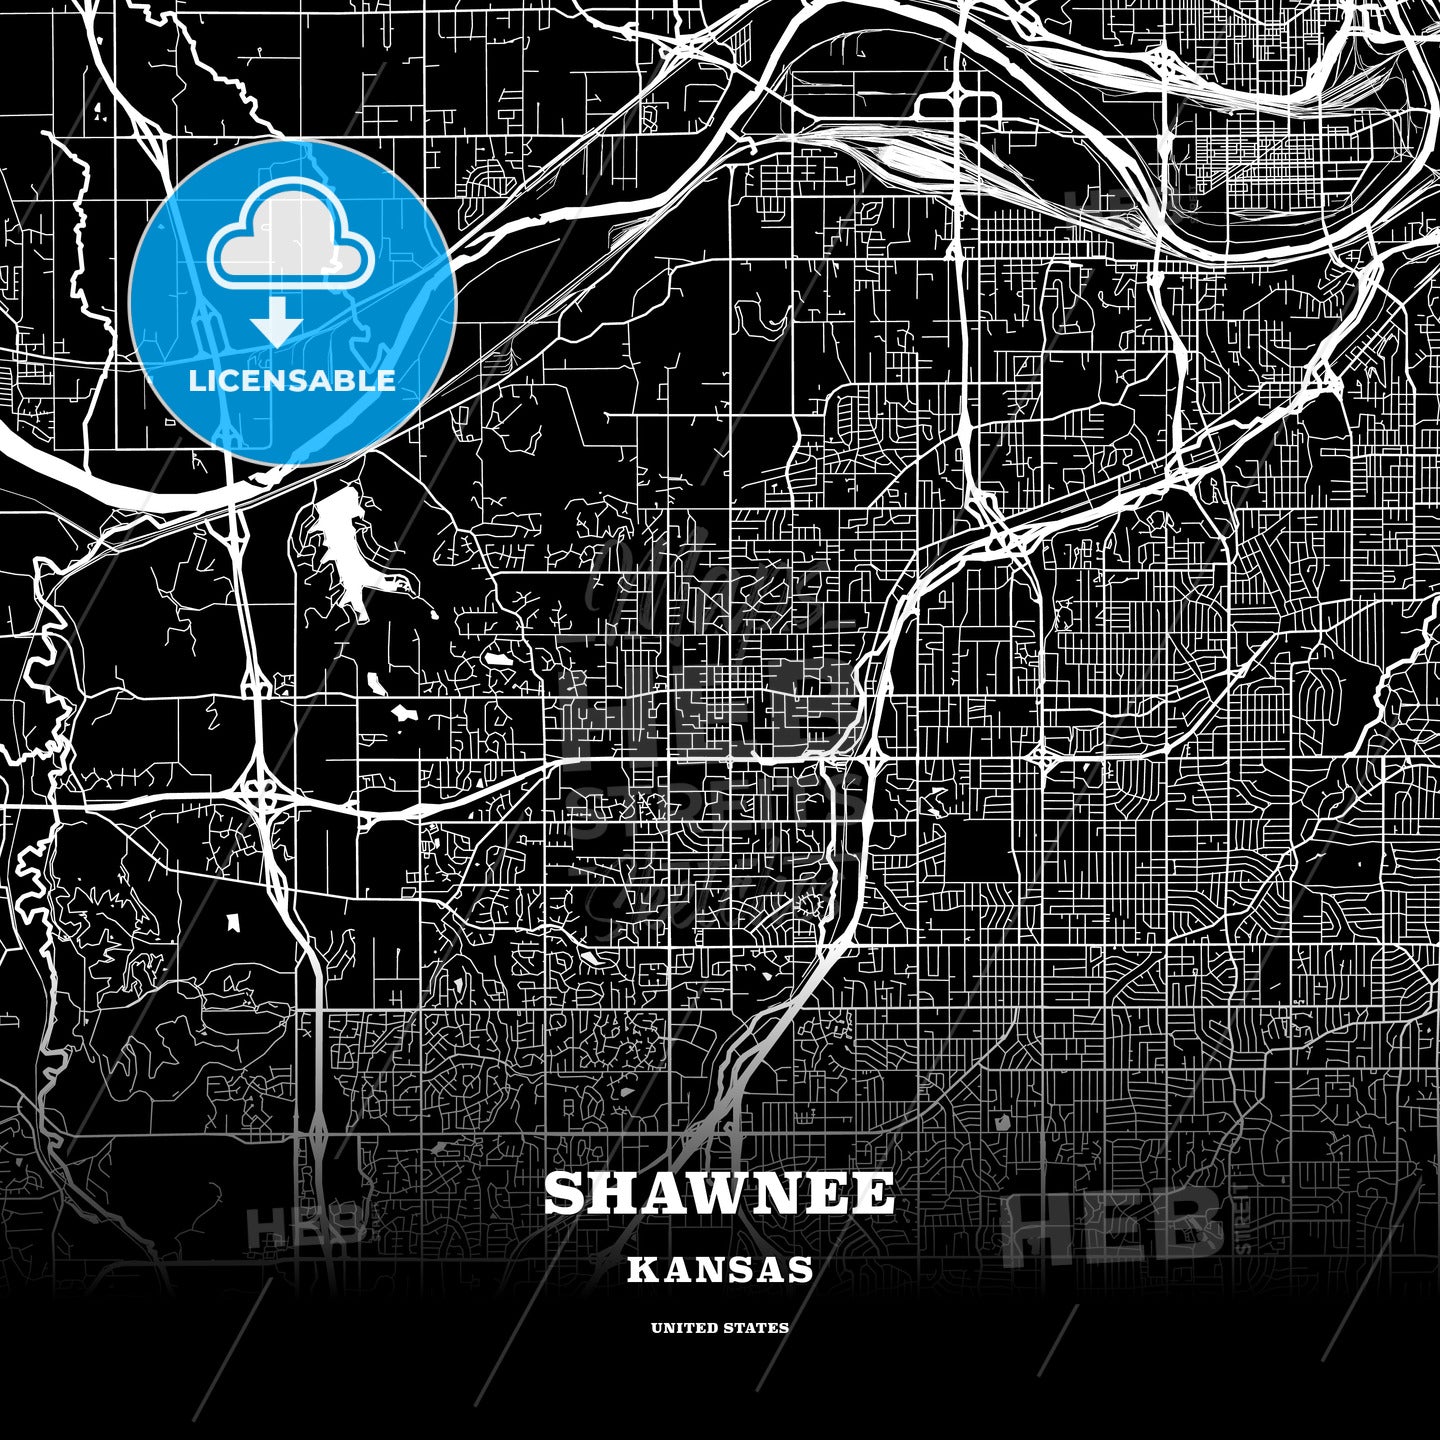 Shawnee, Kansas, USA map